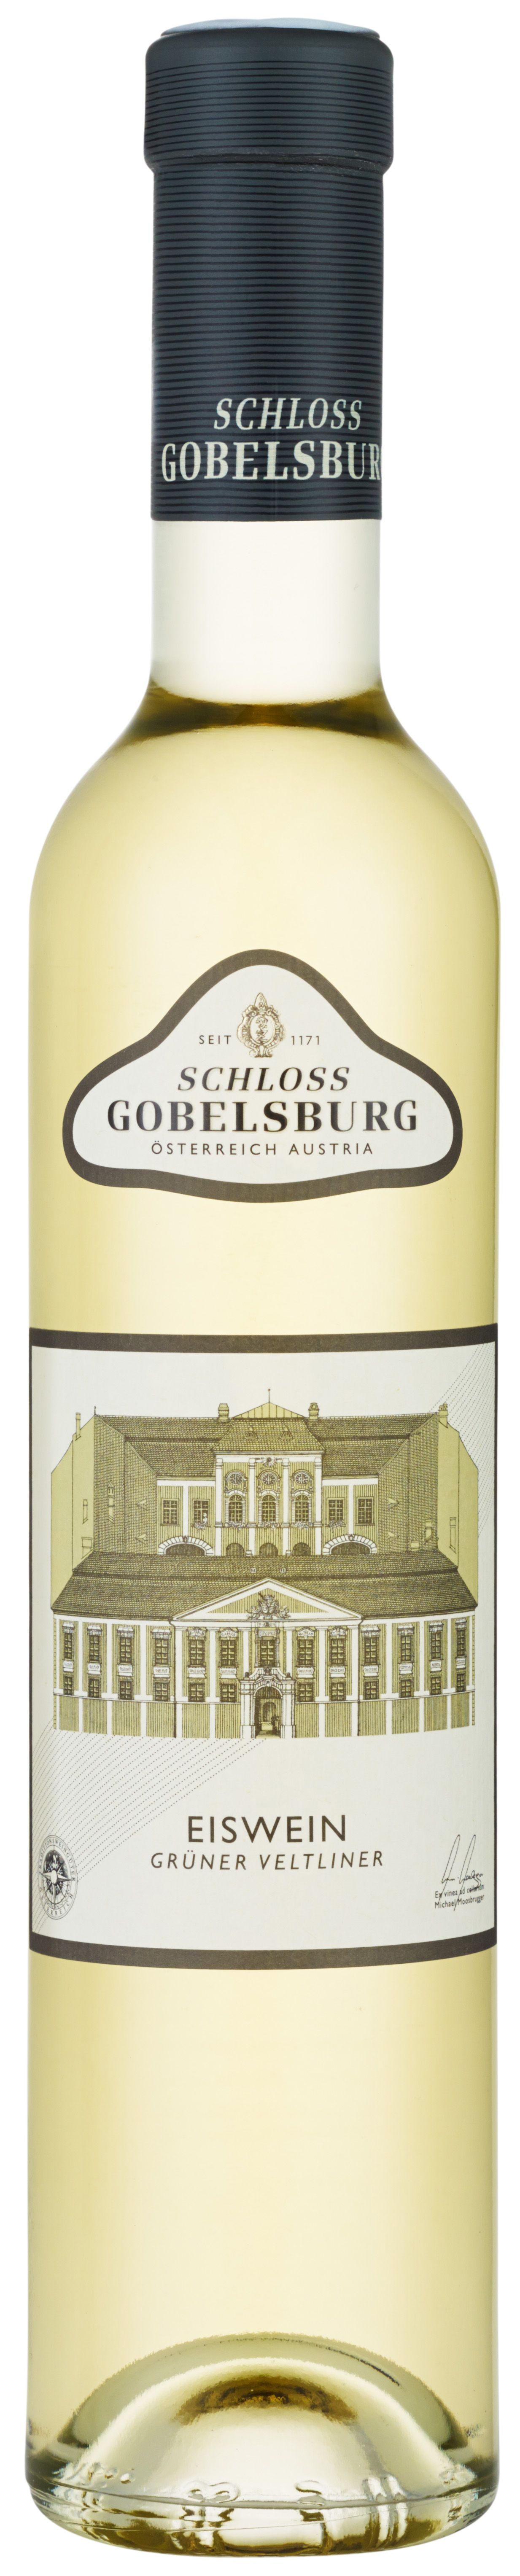 Schloss Gobelsburg, Gruner Veltliner Eiswein, 2015